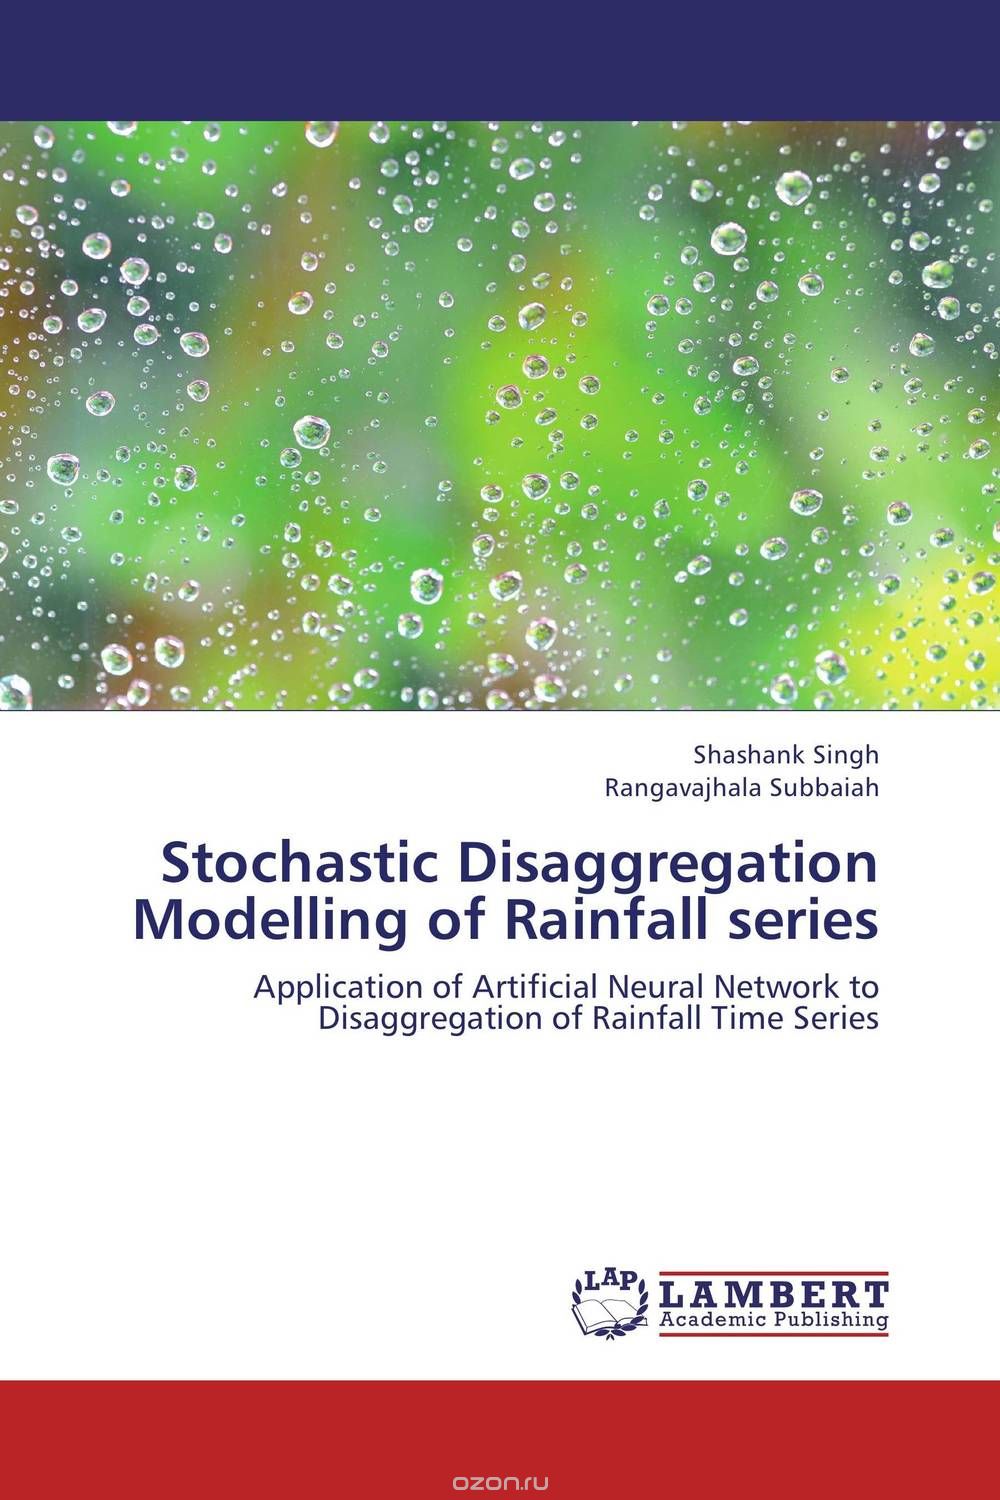 Скачать книгу "Stochastic Disaggregation Modelling of Rainfall series"